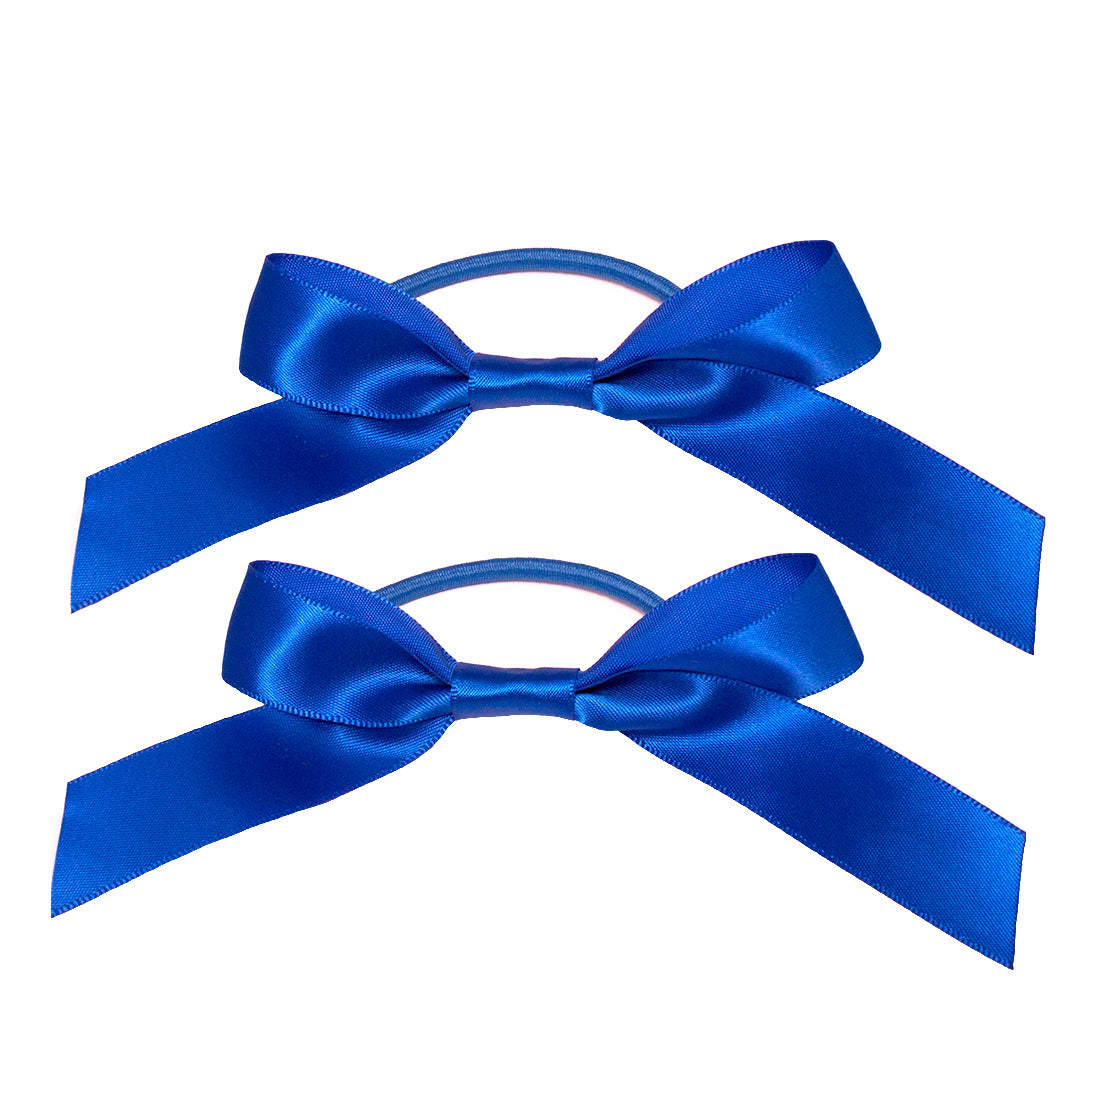 Mia® Spirit Satin Ribbon Bow Ponytailer Set - hair accessories - light blue color - designed by #MiaKaminski of Mia Beauty